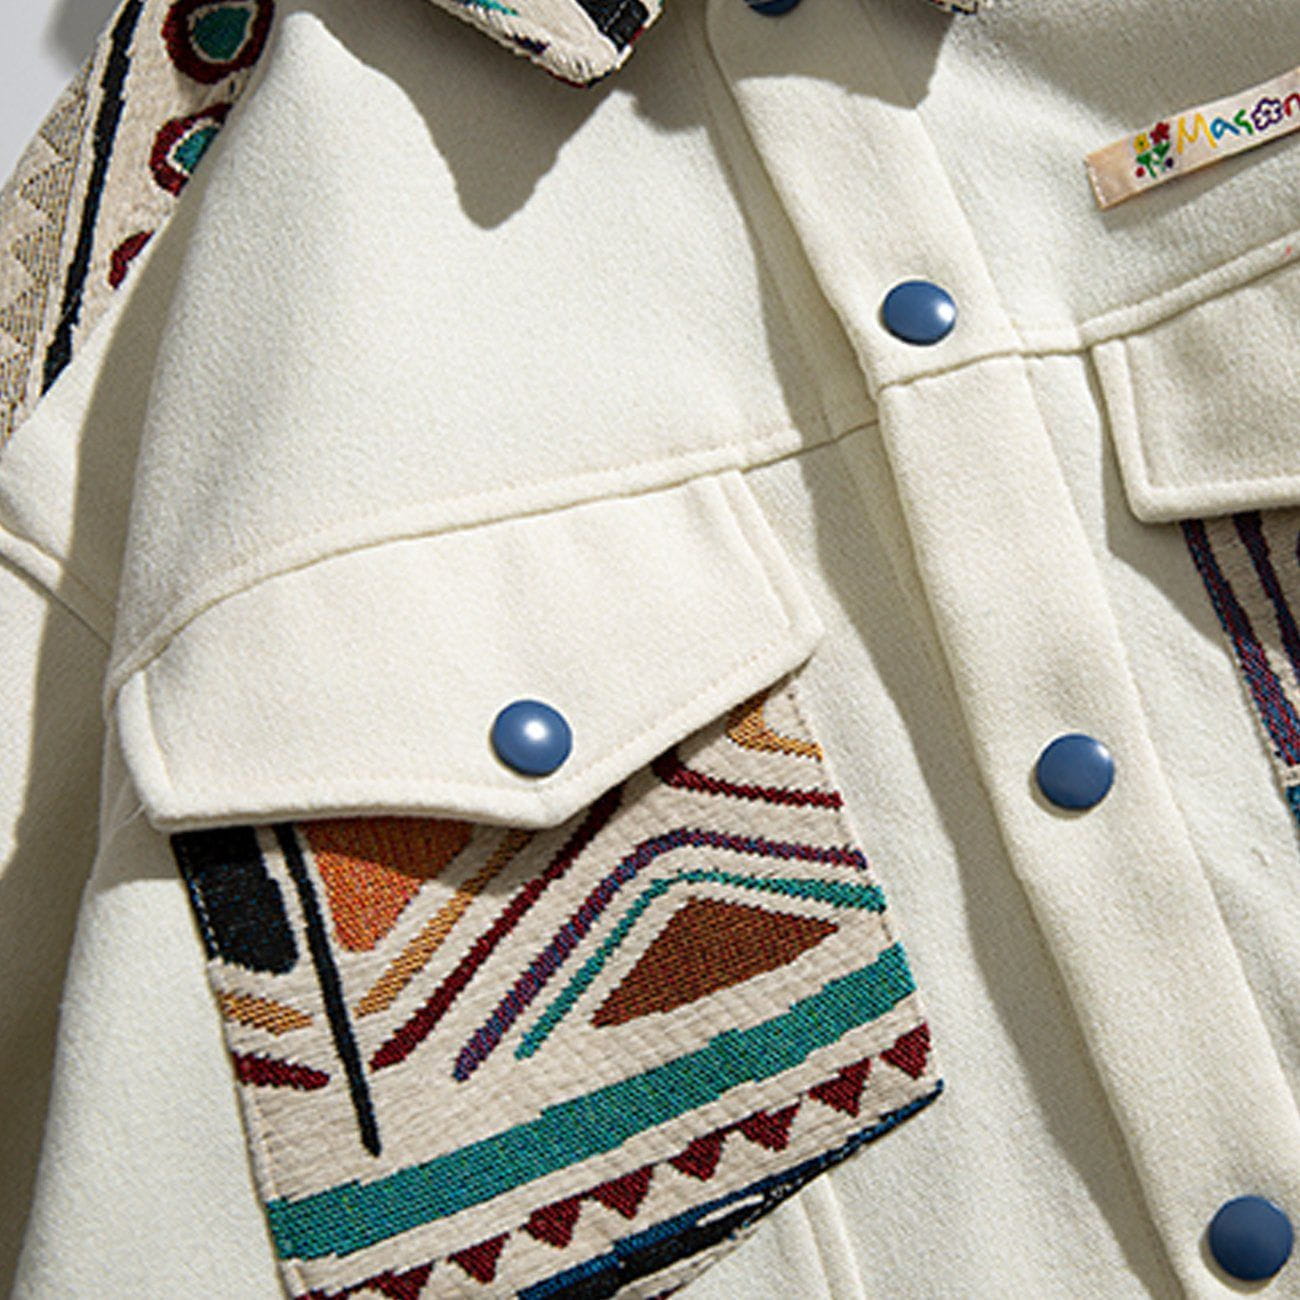 Majesda® - Ethnic Printing Stitching Jacket outfit ideas, streetwear fashion - majesda.com